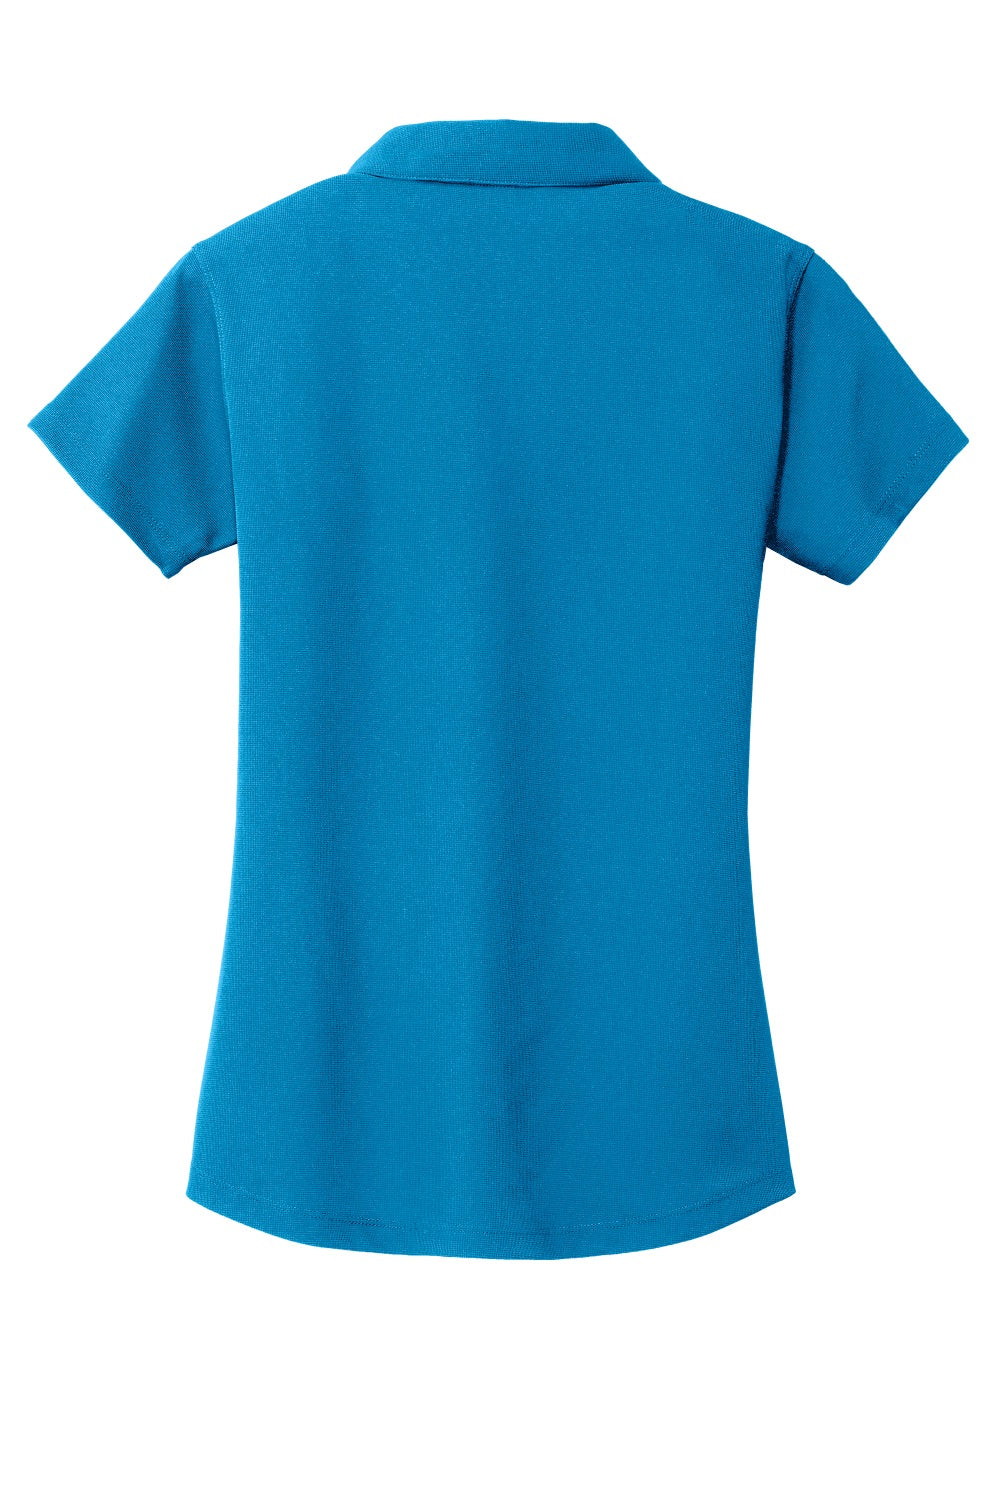 Port Authority L572 Womens Dry Zone Moisture Wicking Short Sleeve Polo Shirt Celadon Blue Flat Back